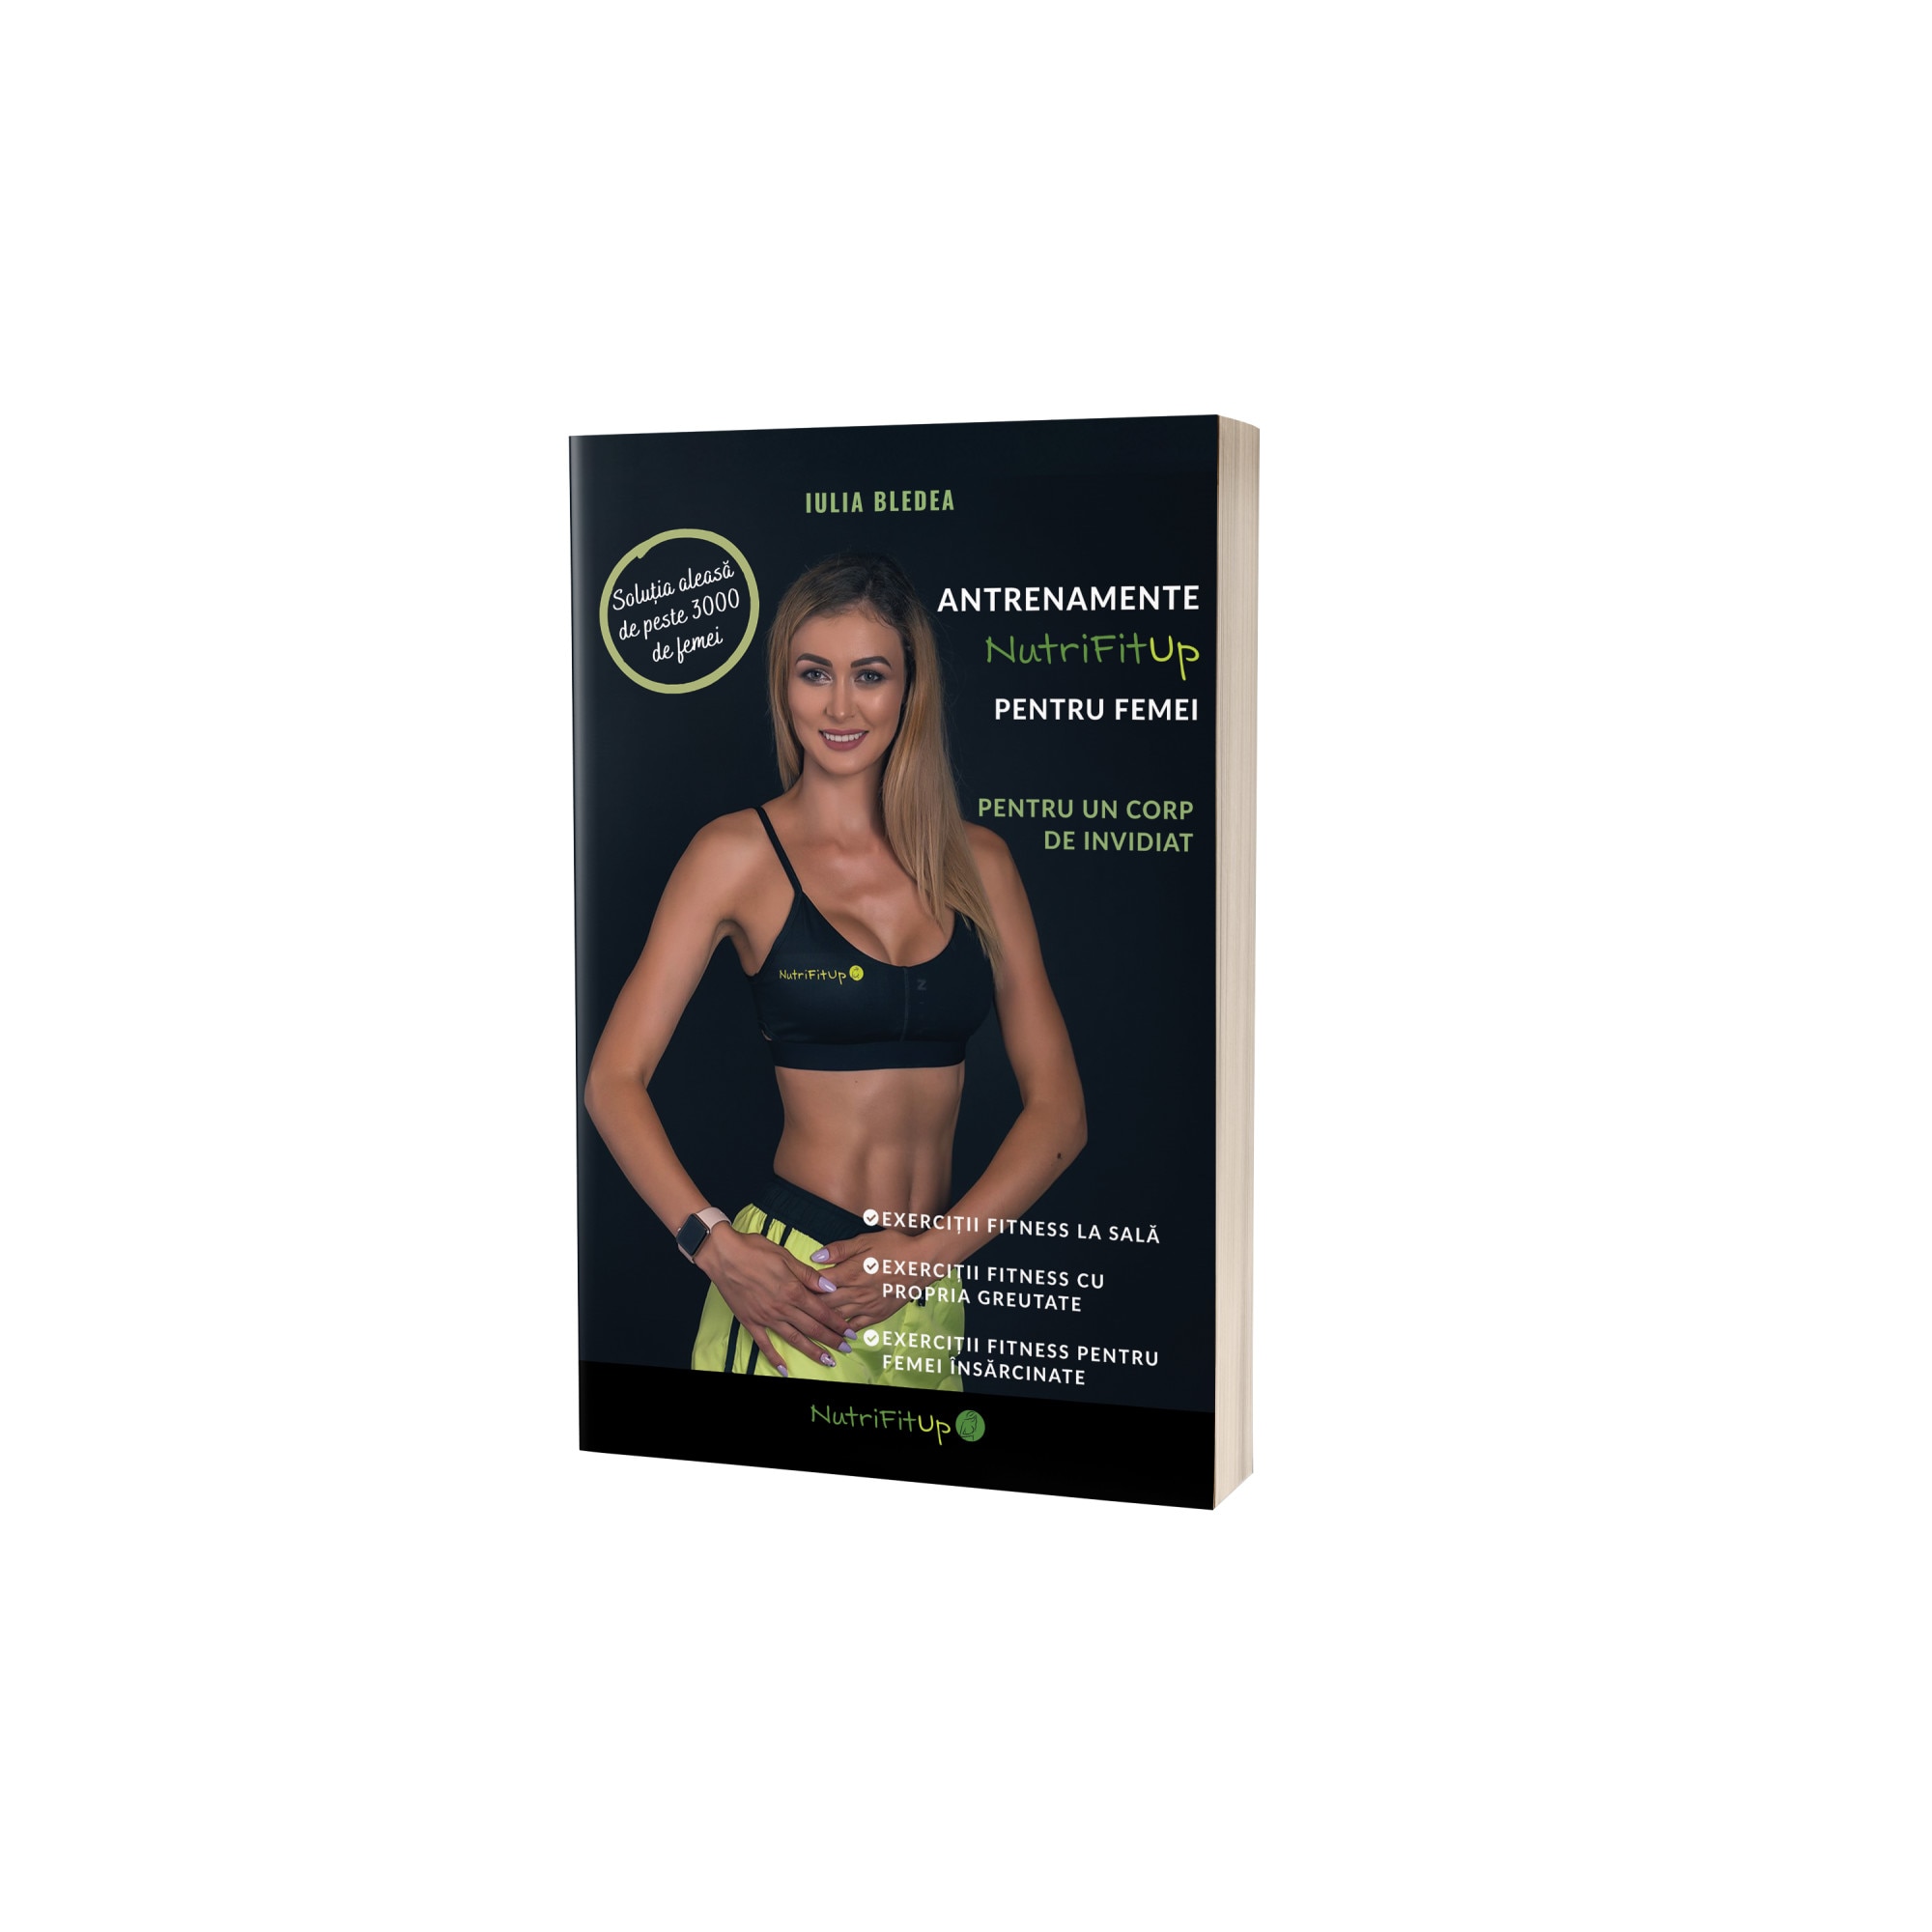 Dieta Alcalina 4 Retete PDF Descargar libro dieta alcalina pdf gratis